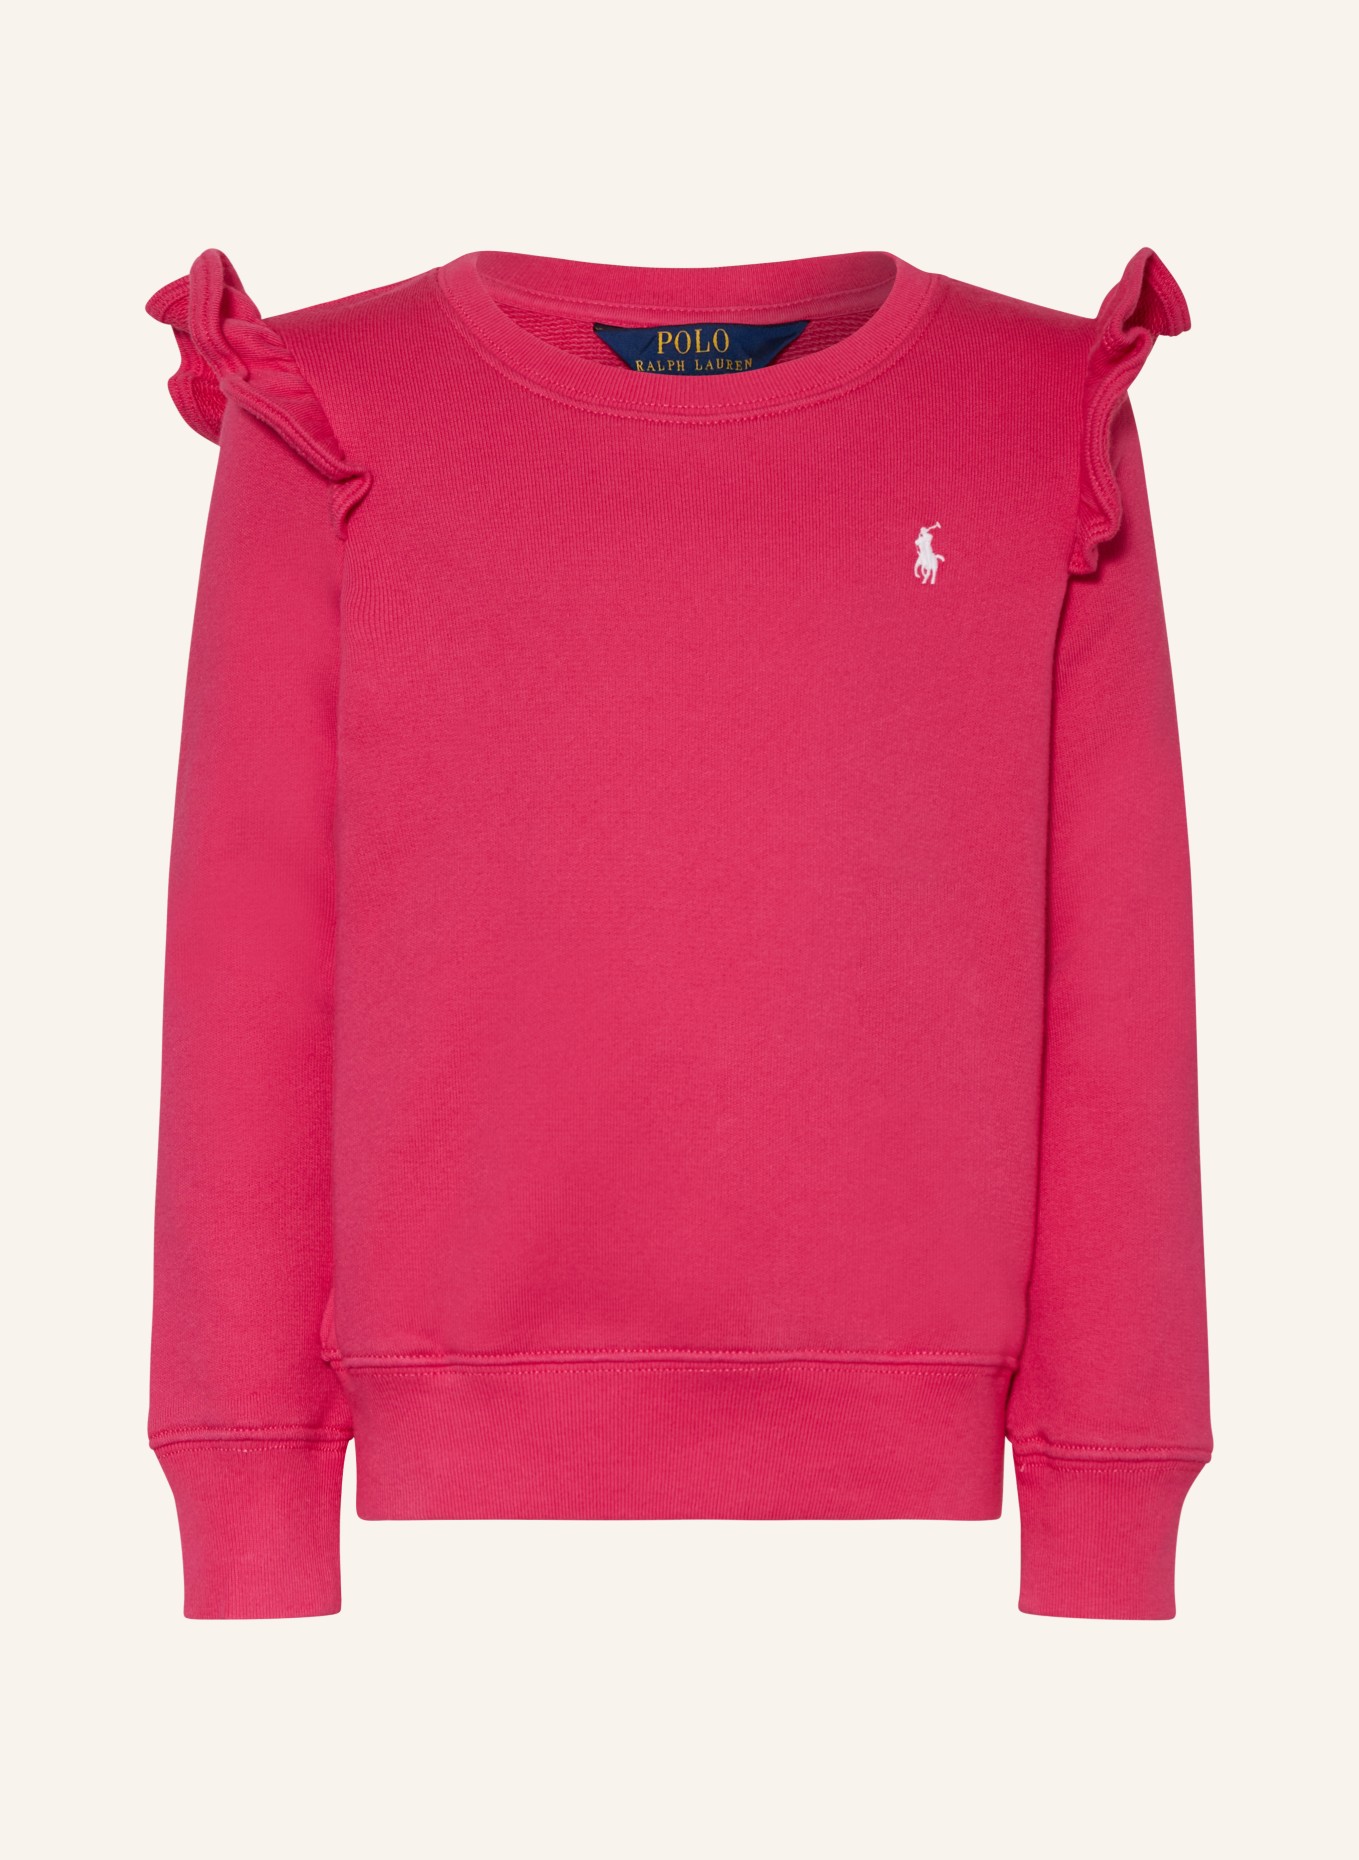 POLO RALPH LAUREN Sweatshirt, Farbe: PINK (Bild 1)